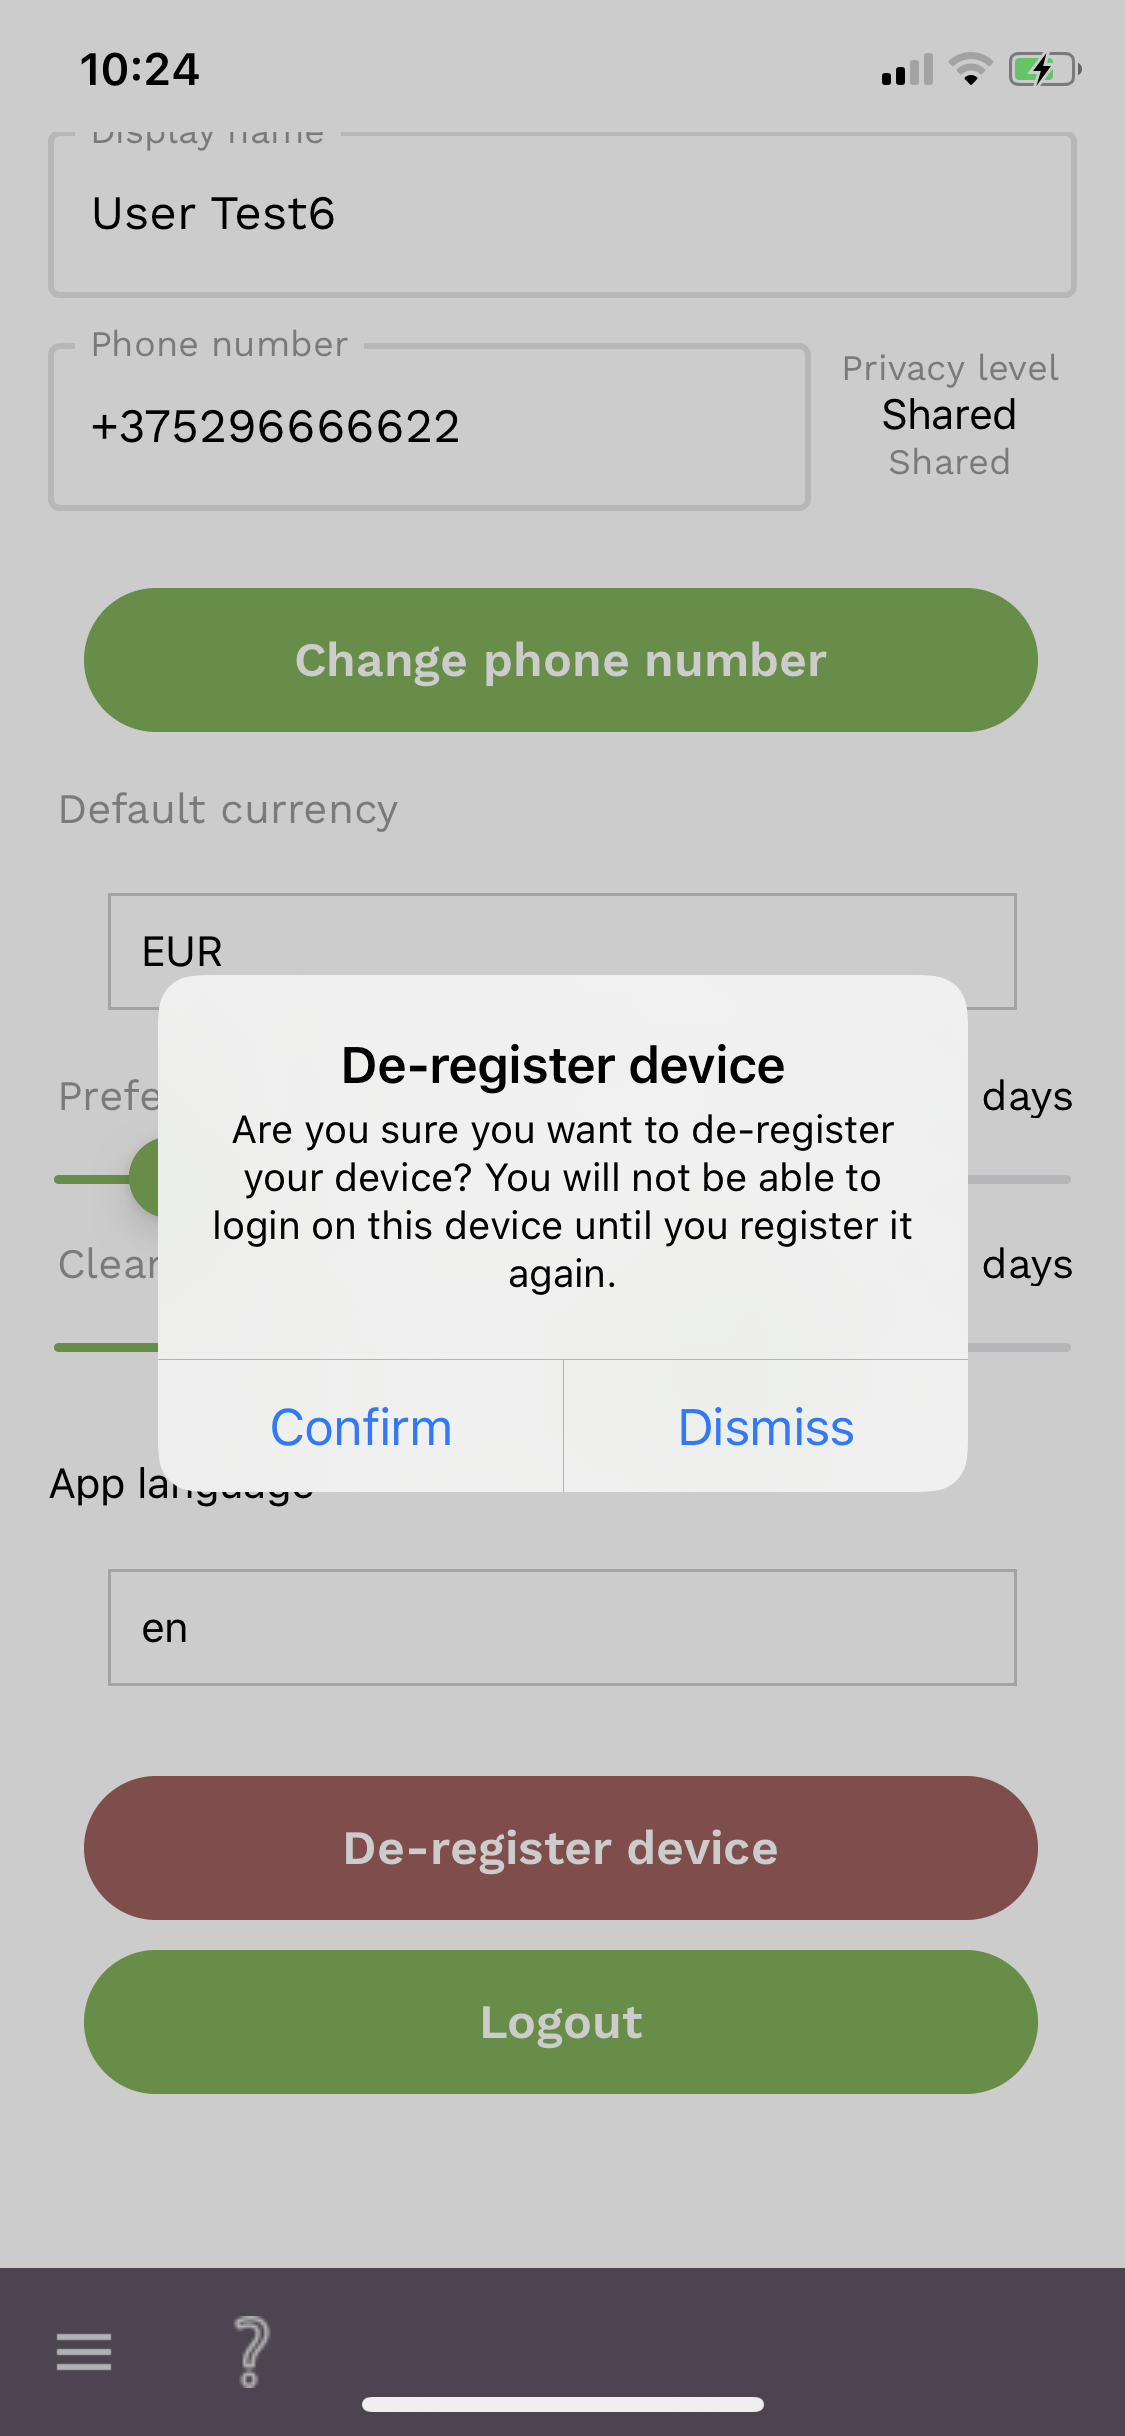 de-register device screen